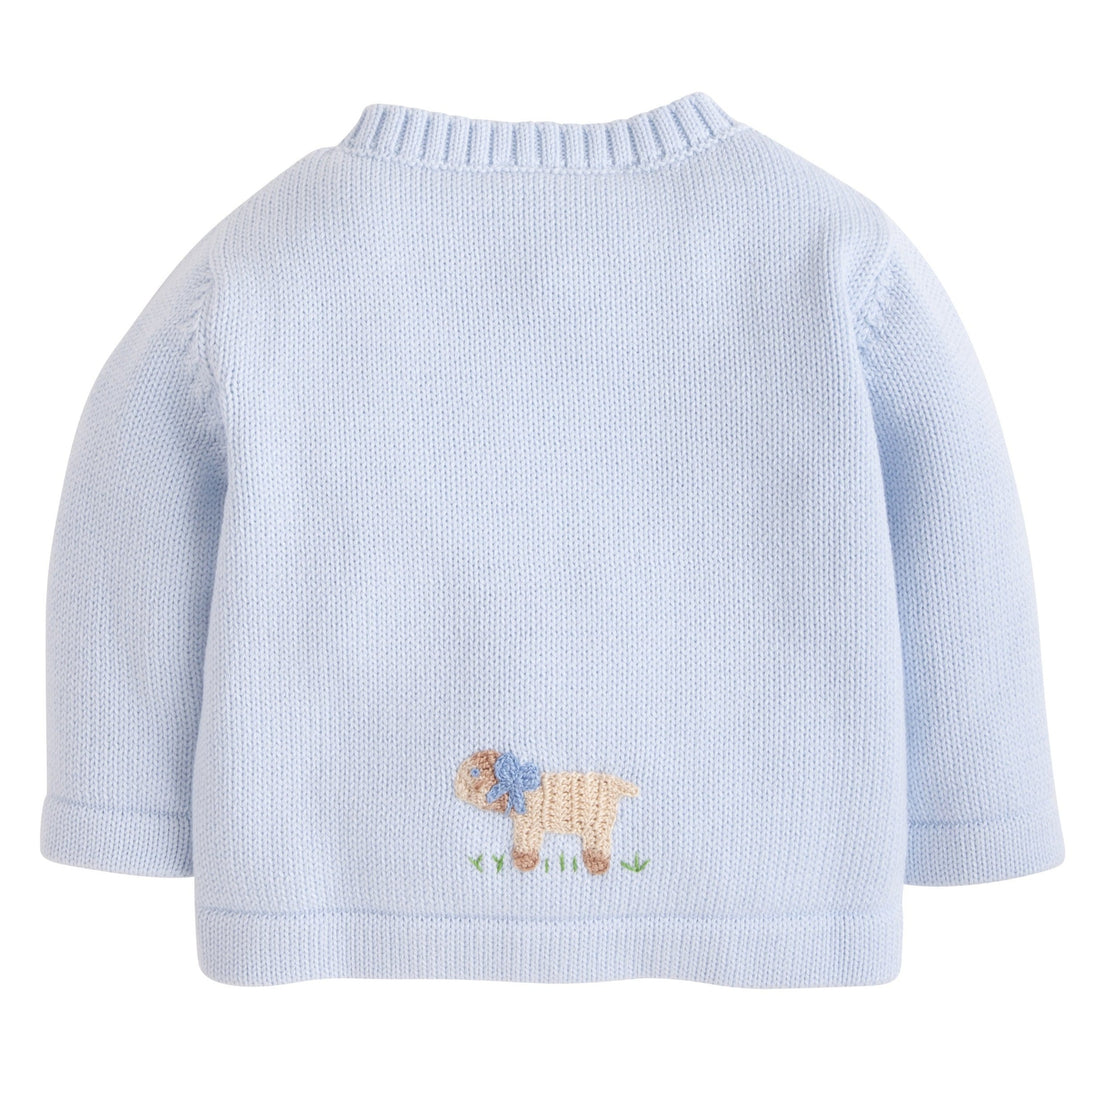 Little English signature year round crochet sweater for baby boy, pima cotton sheep crochet sweater, traditional children&